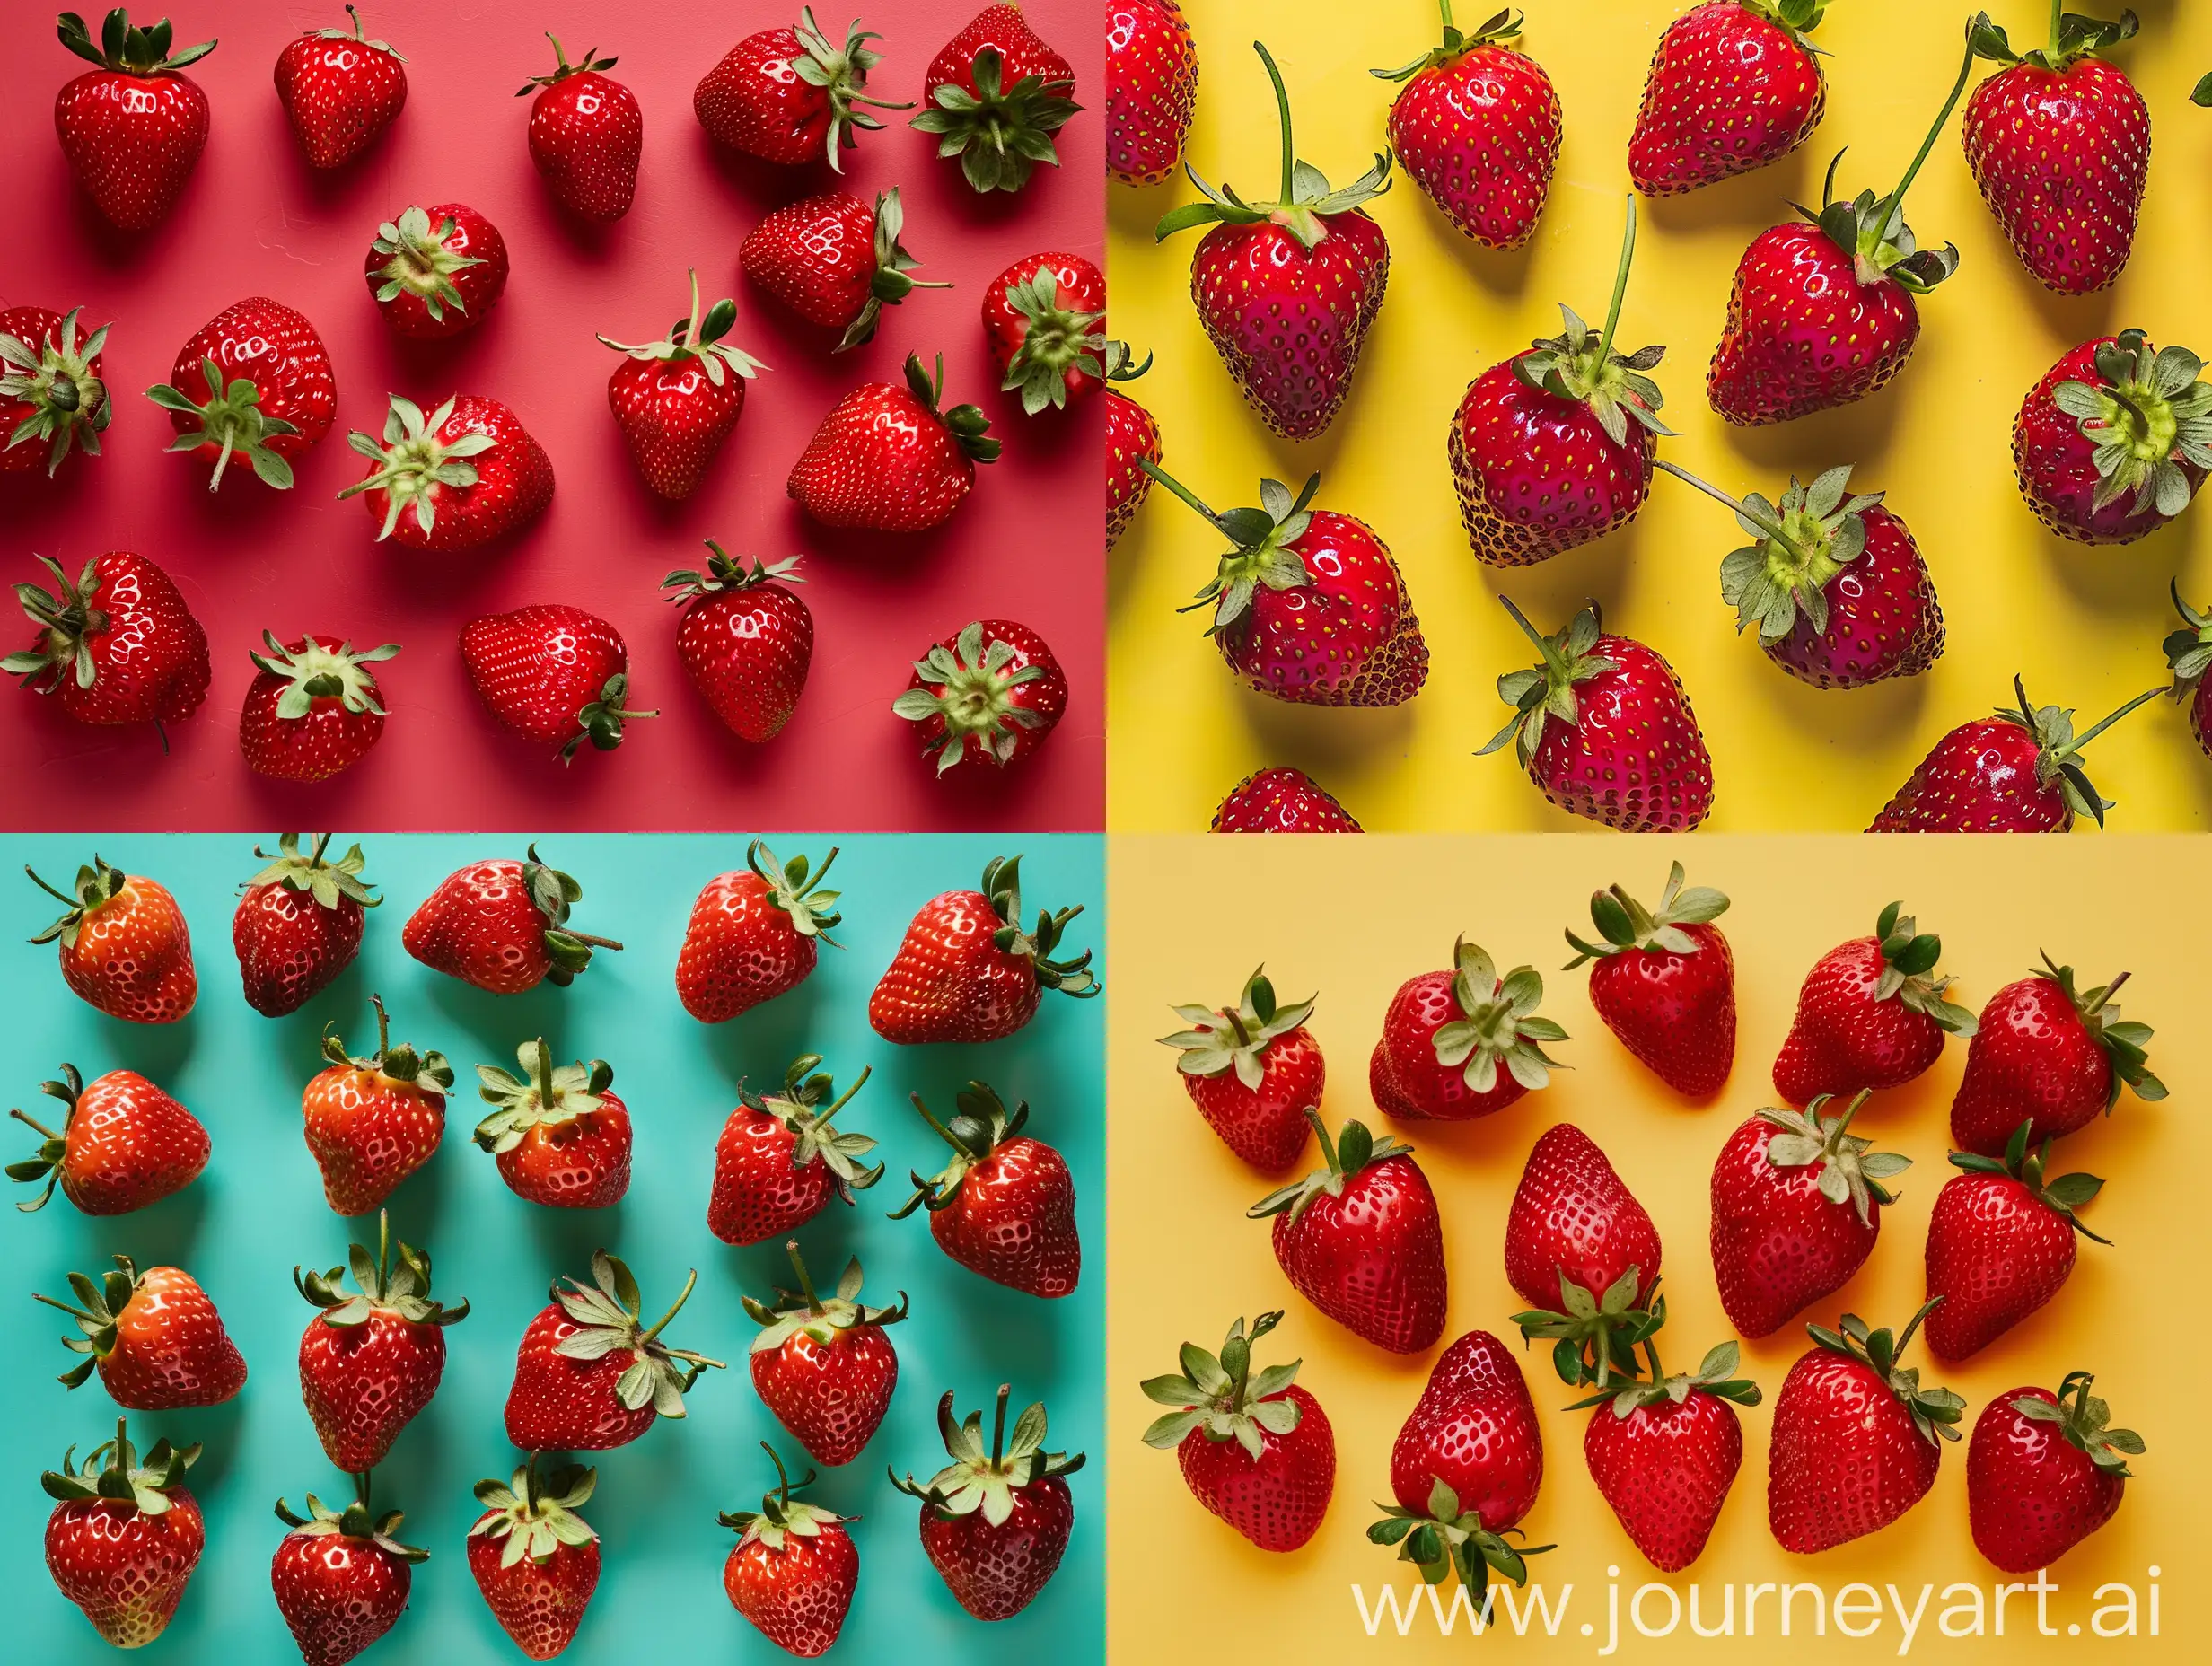 Vibrant-Studio-Photography-Colorful-Strawberries-on-Display